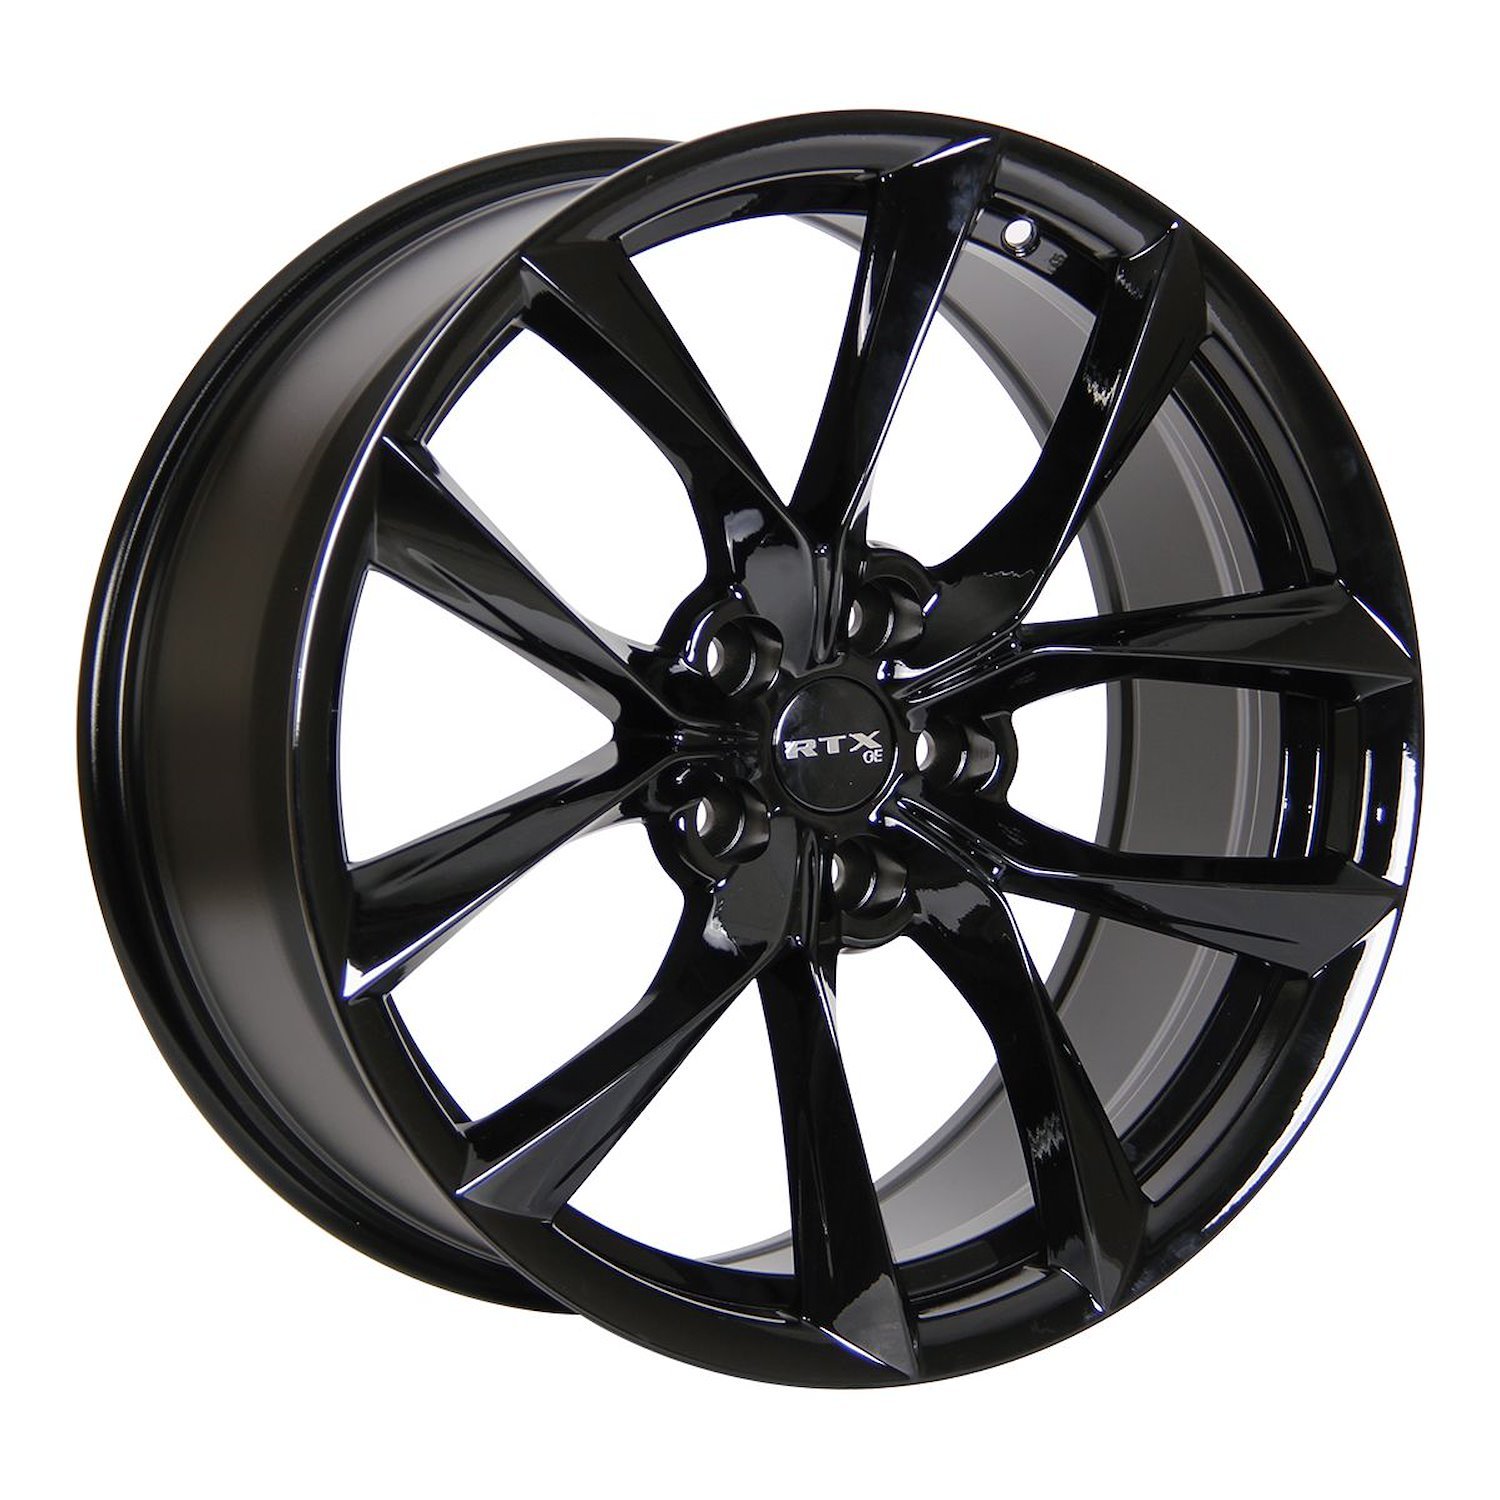 082736 OE-Series Spider Wheel [Size: 20" x 8.50"] Gloss Black Finish